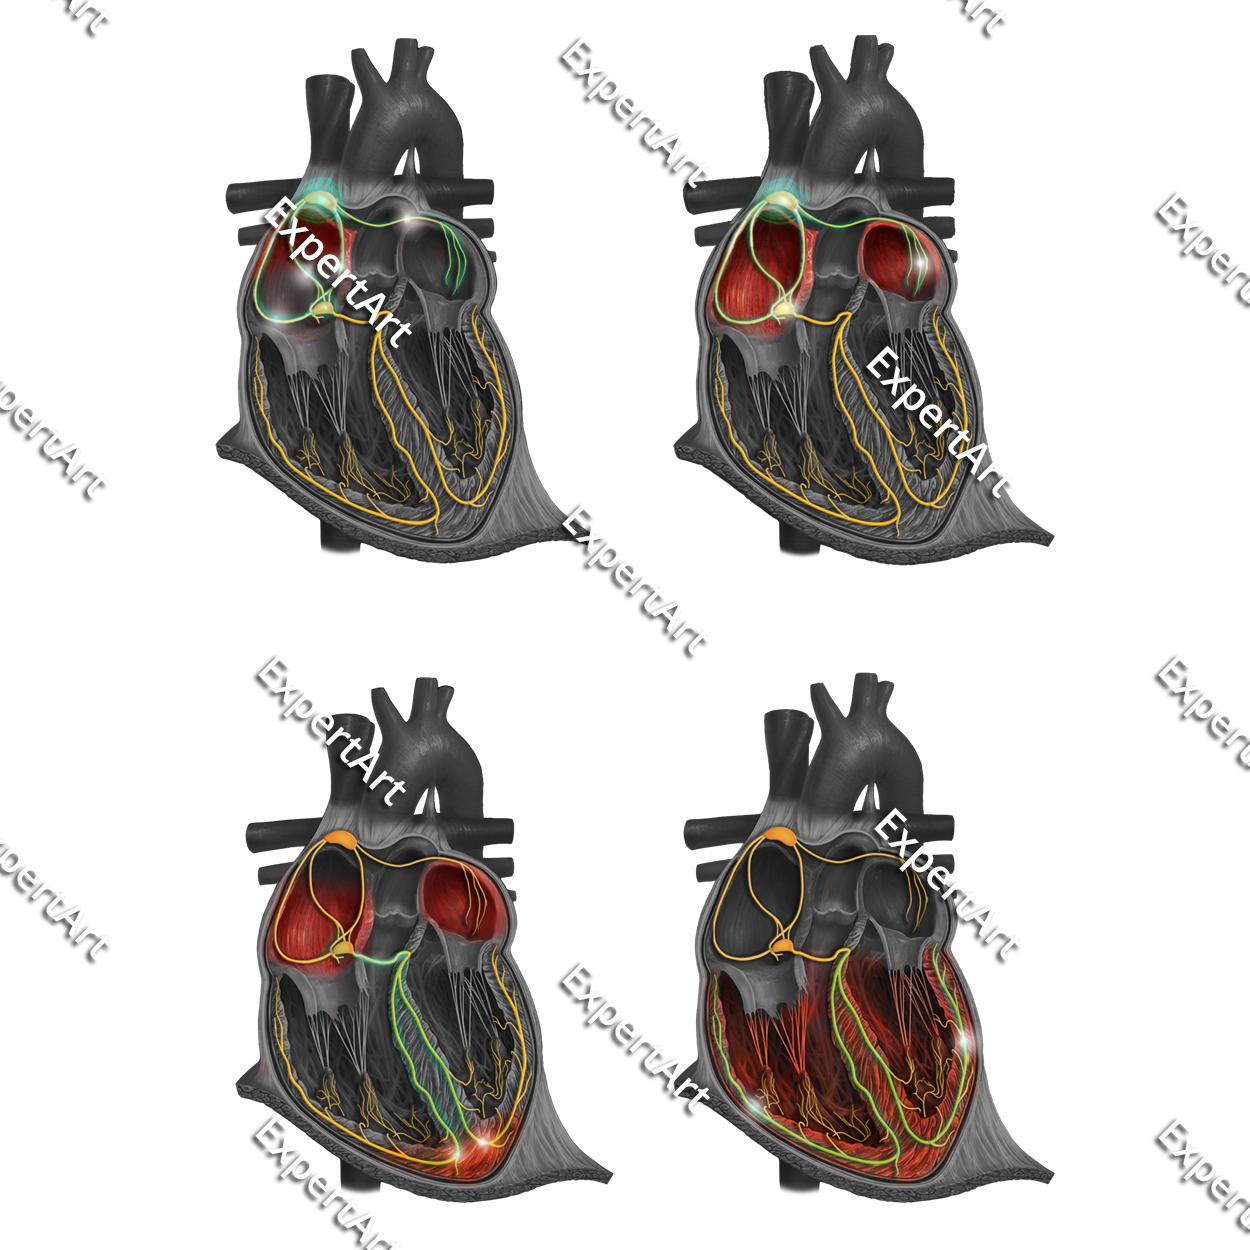 ECG sinus node as pacemaker of the heart